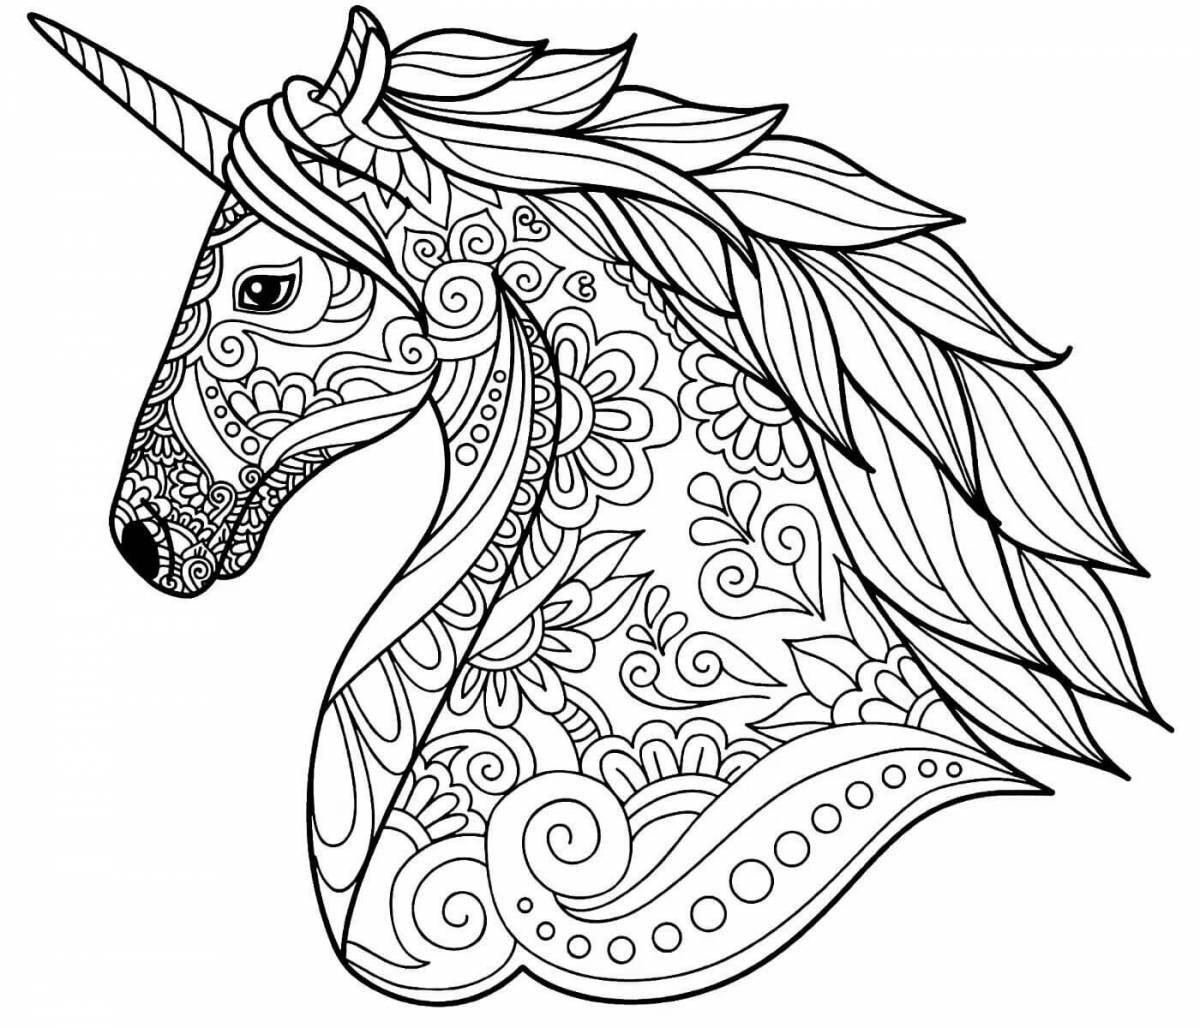 Unicorn mystical coloring book